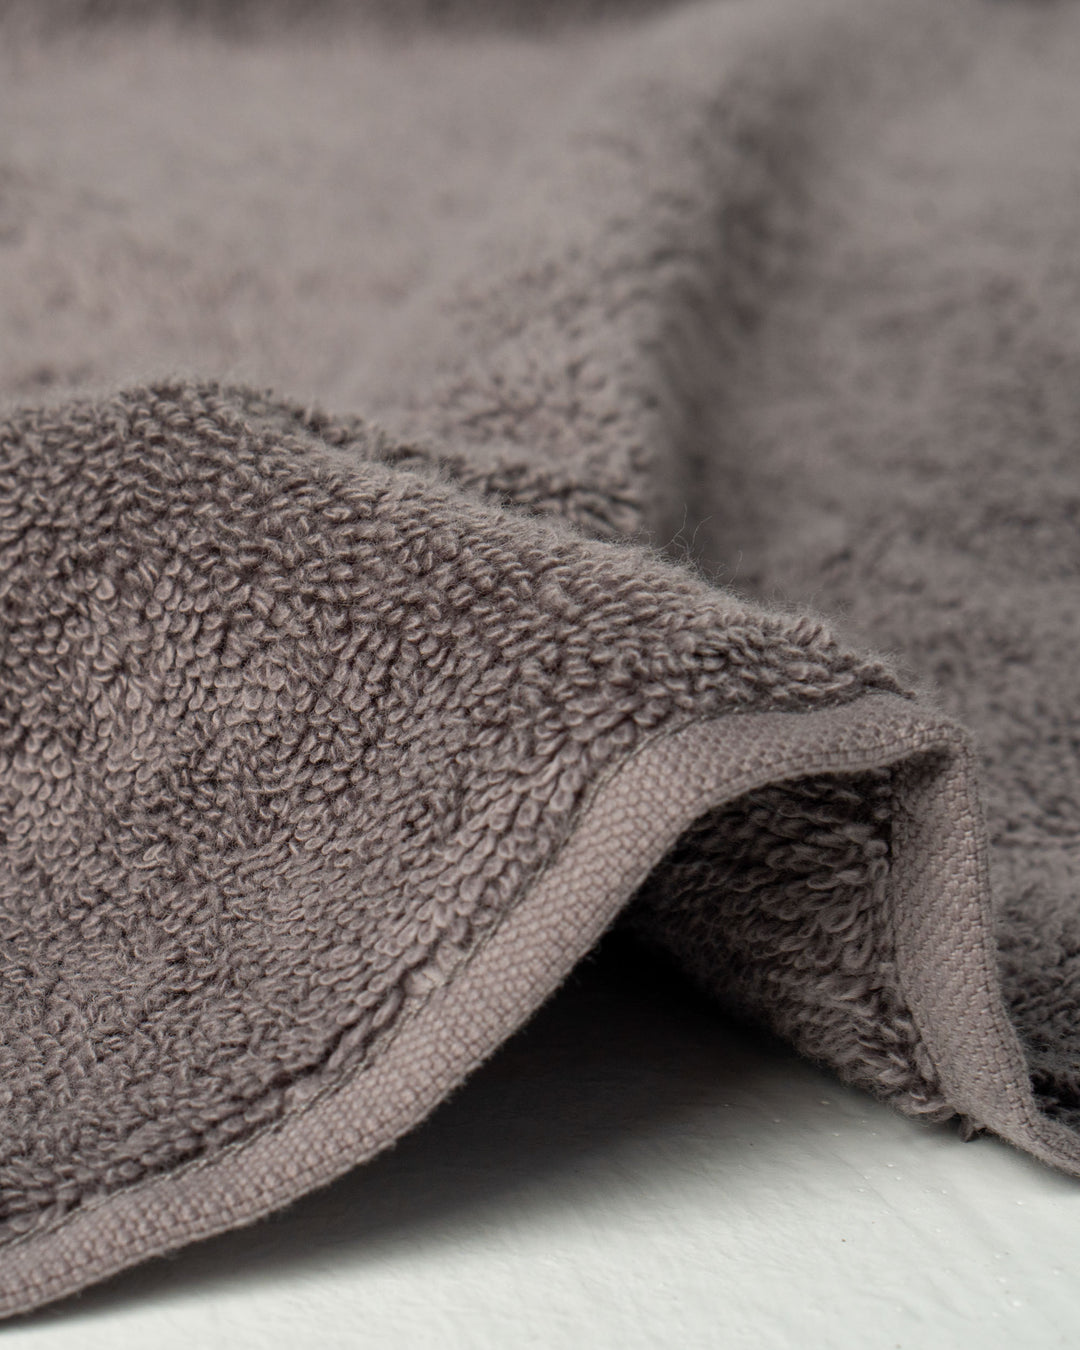 high quality cotton towel grey